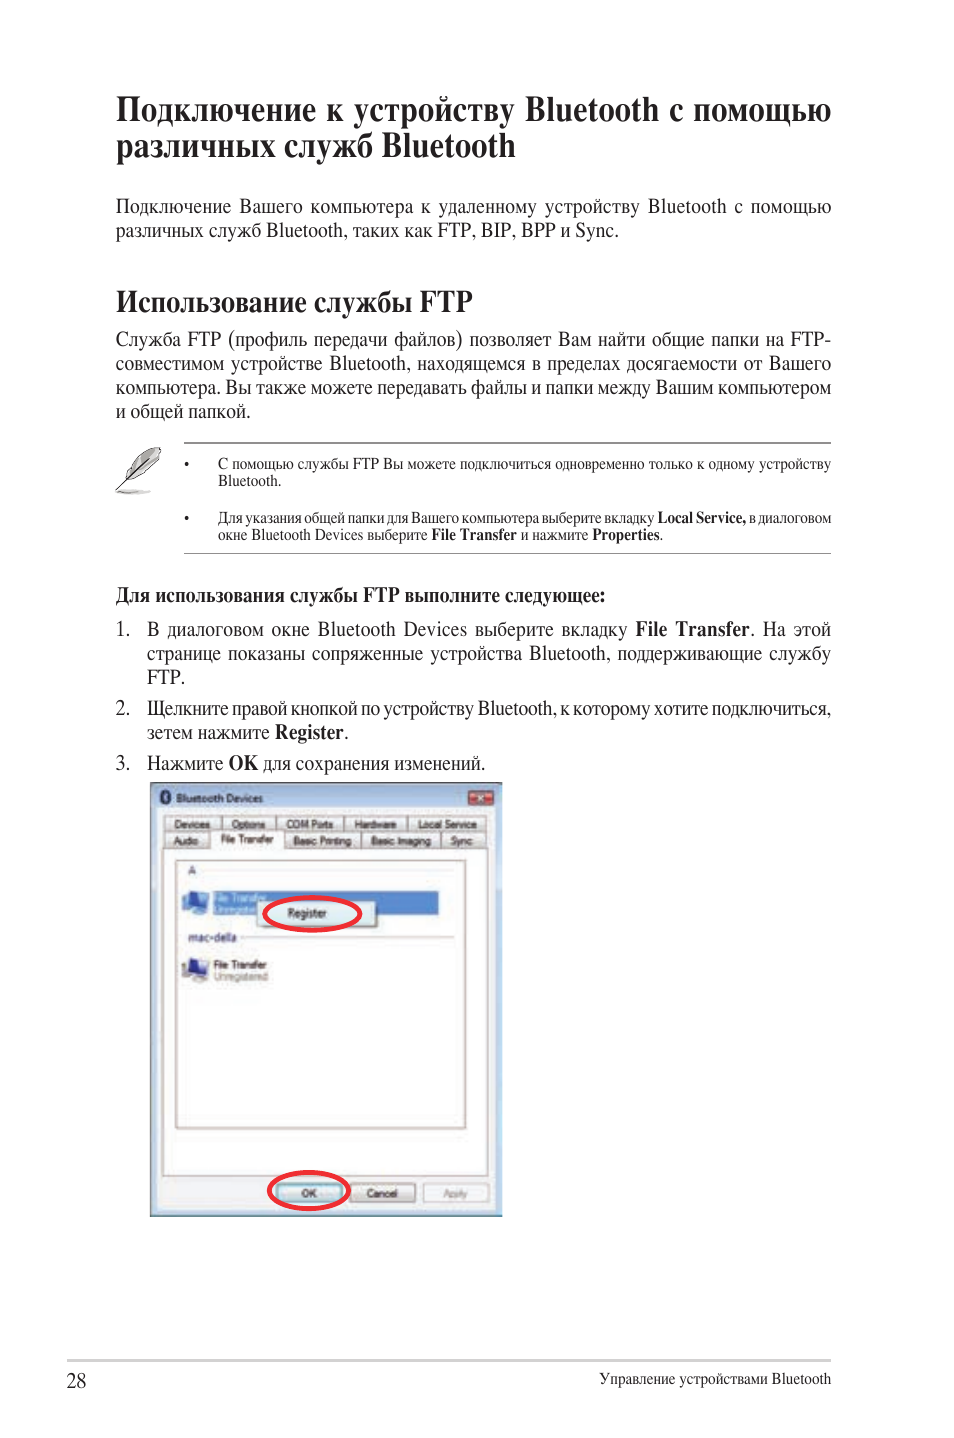 Использование ftp, Bluetooth Инструкция по эксплуатации Asus USB-BT211 Mini Bluetooth Dongle | Страница 33 / 41 | Оригинал